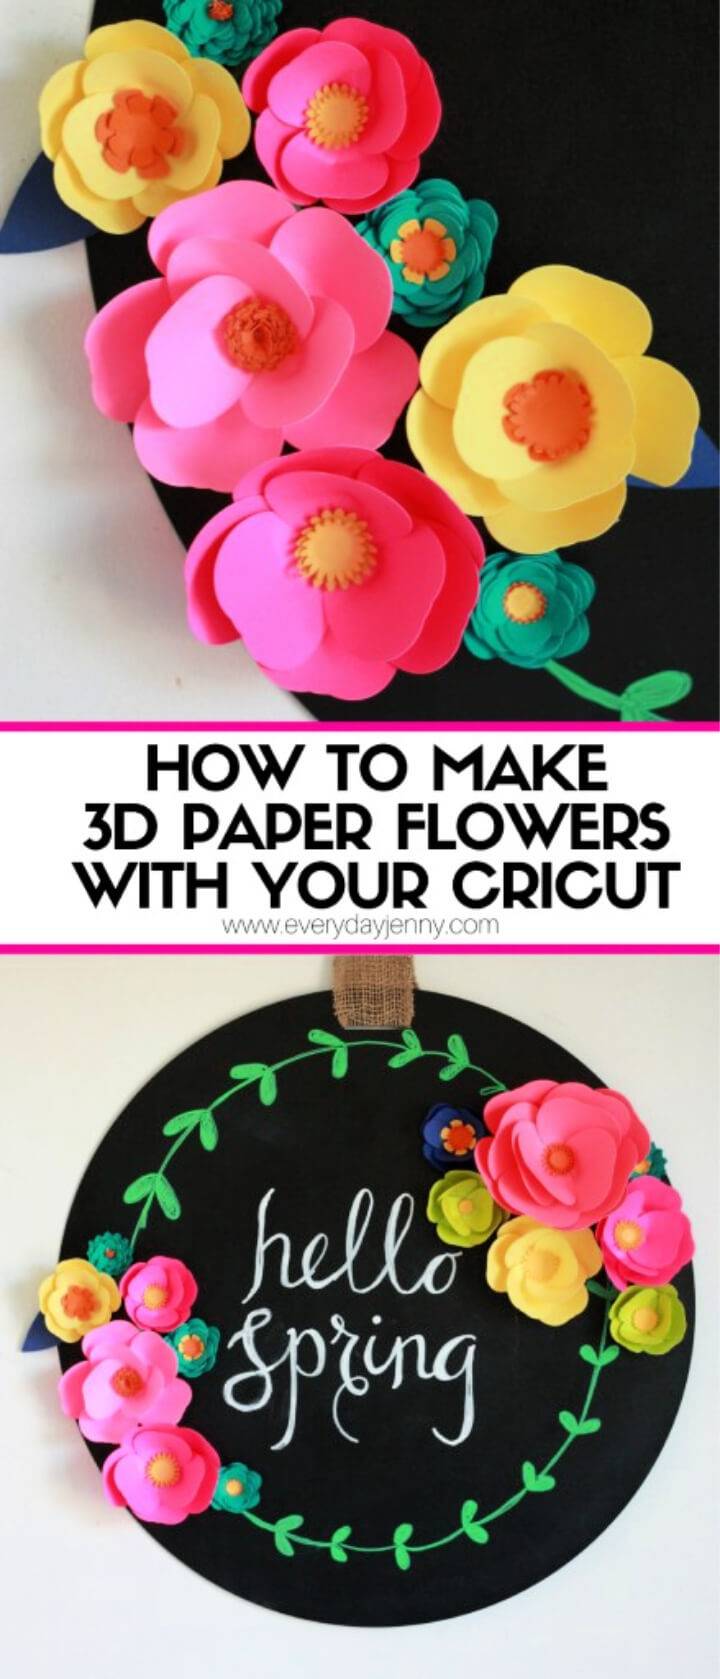 DIY 3D Paper Flower Magnets with Cricut